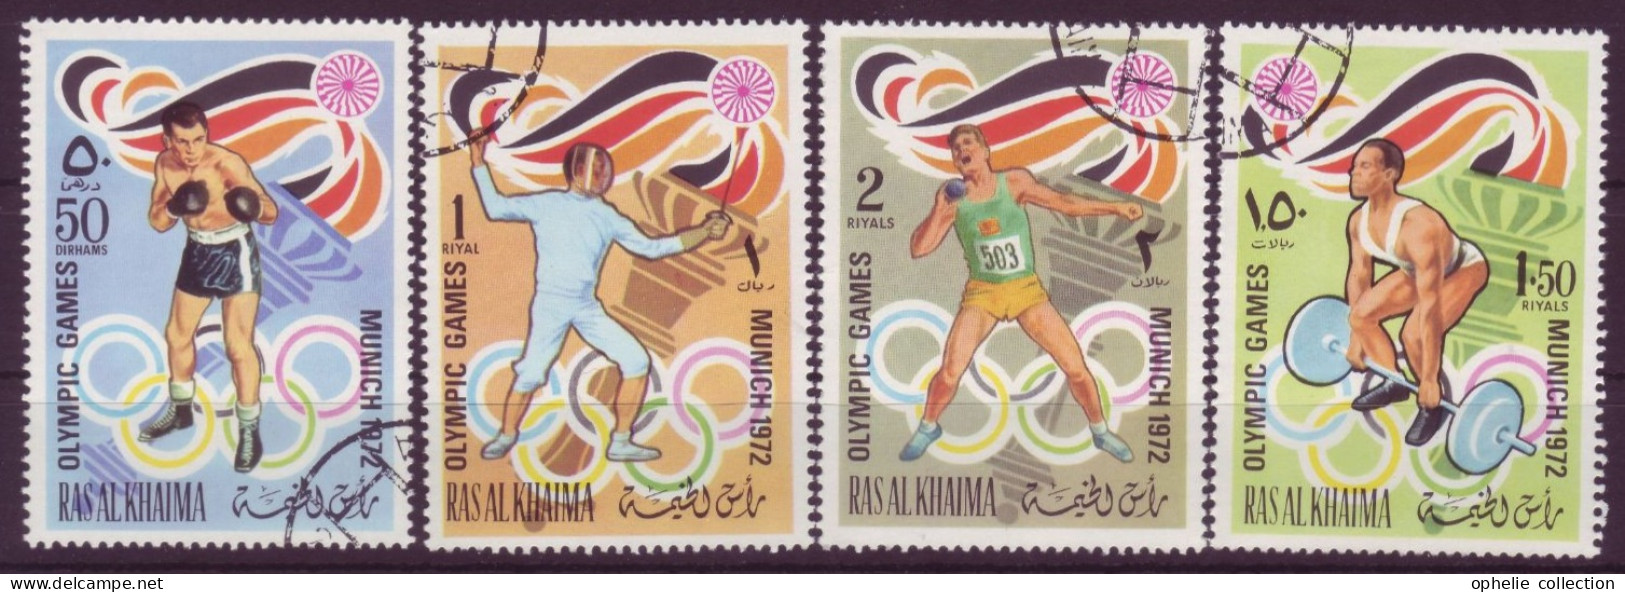 Asie - Ras-el-Khaima - Munich 72 Olympic Games - 5 Timbres Différents - 7029 - Ra's Al-Chaima